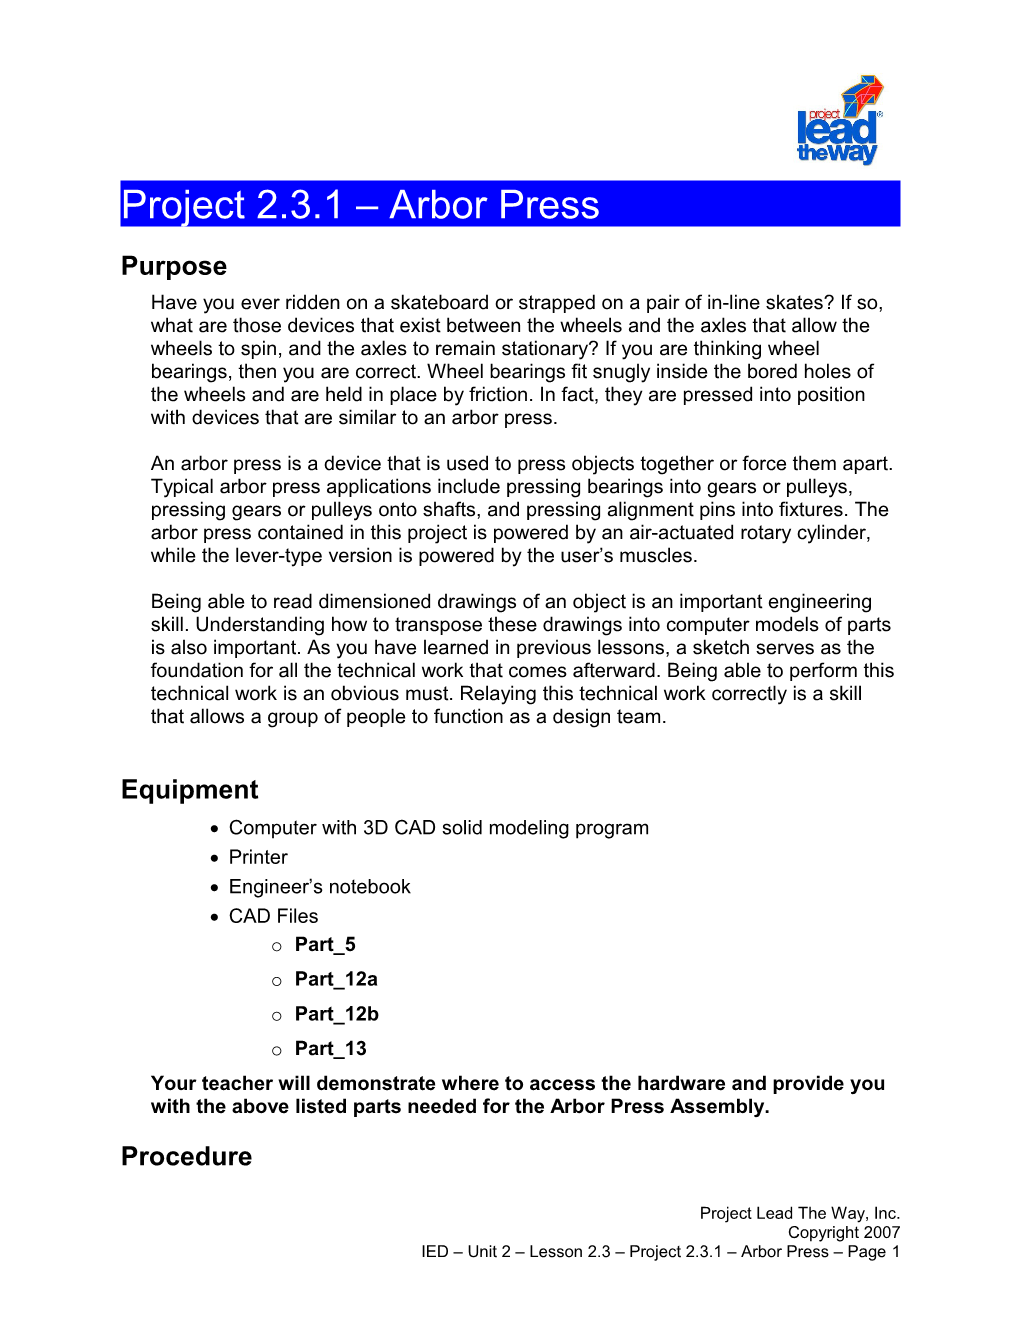 Project 2.3.1: Arbor Press